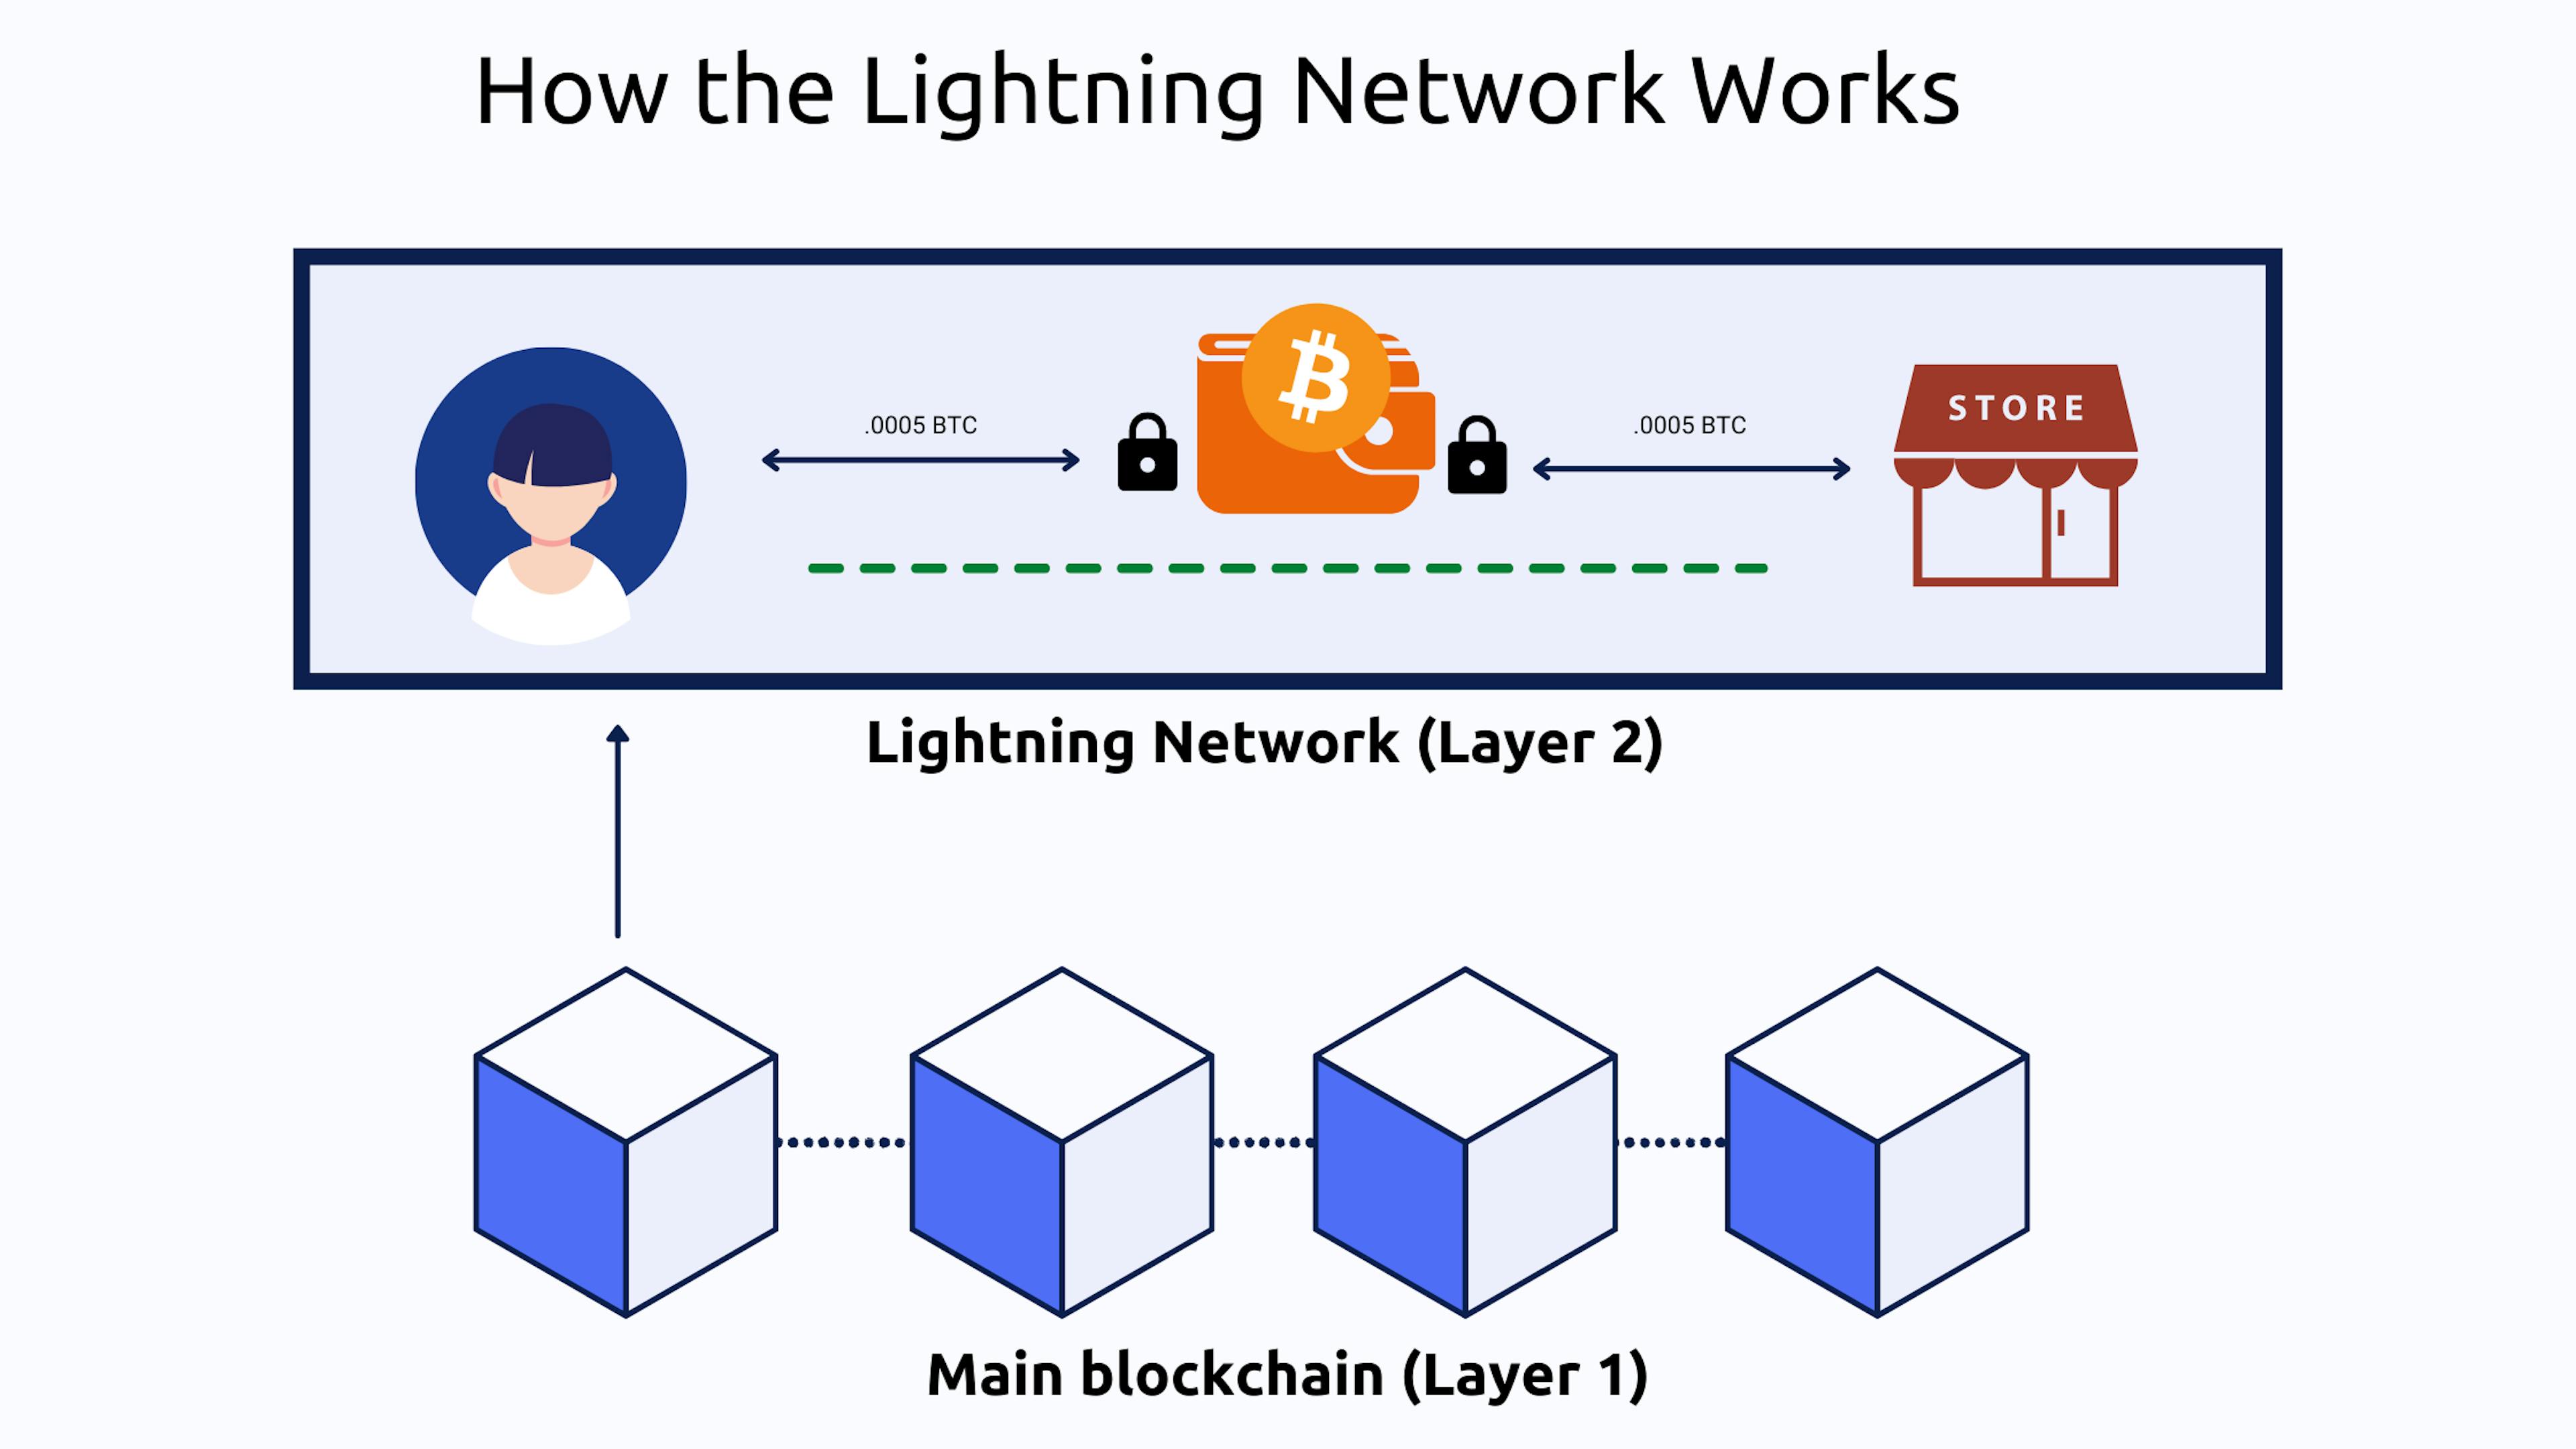 Source de l'image : https://bitpay.com/blog/what-is-the-lightning-network/